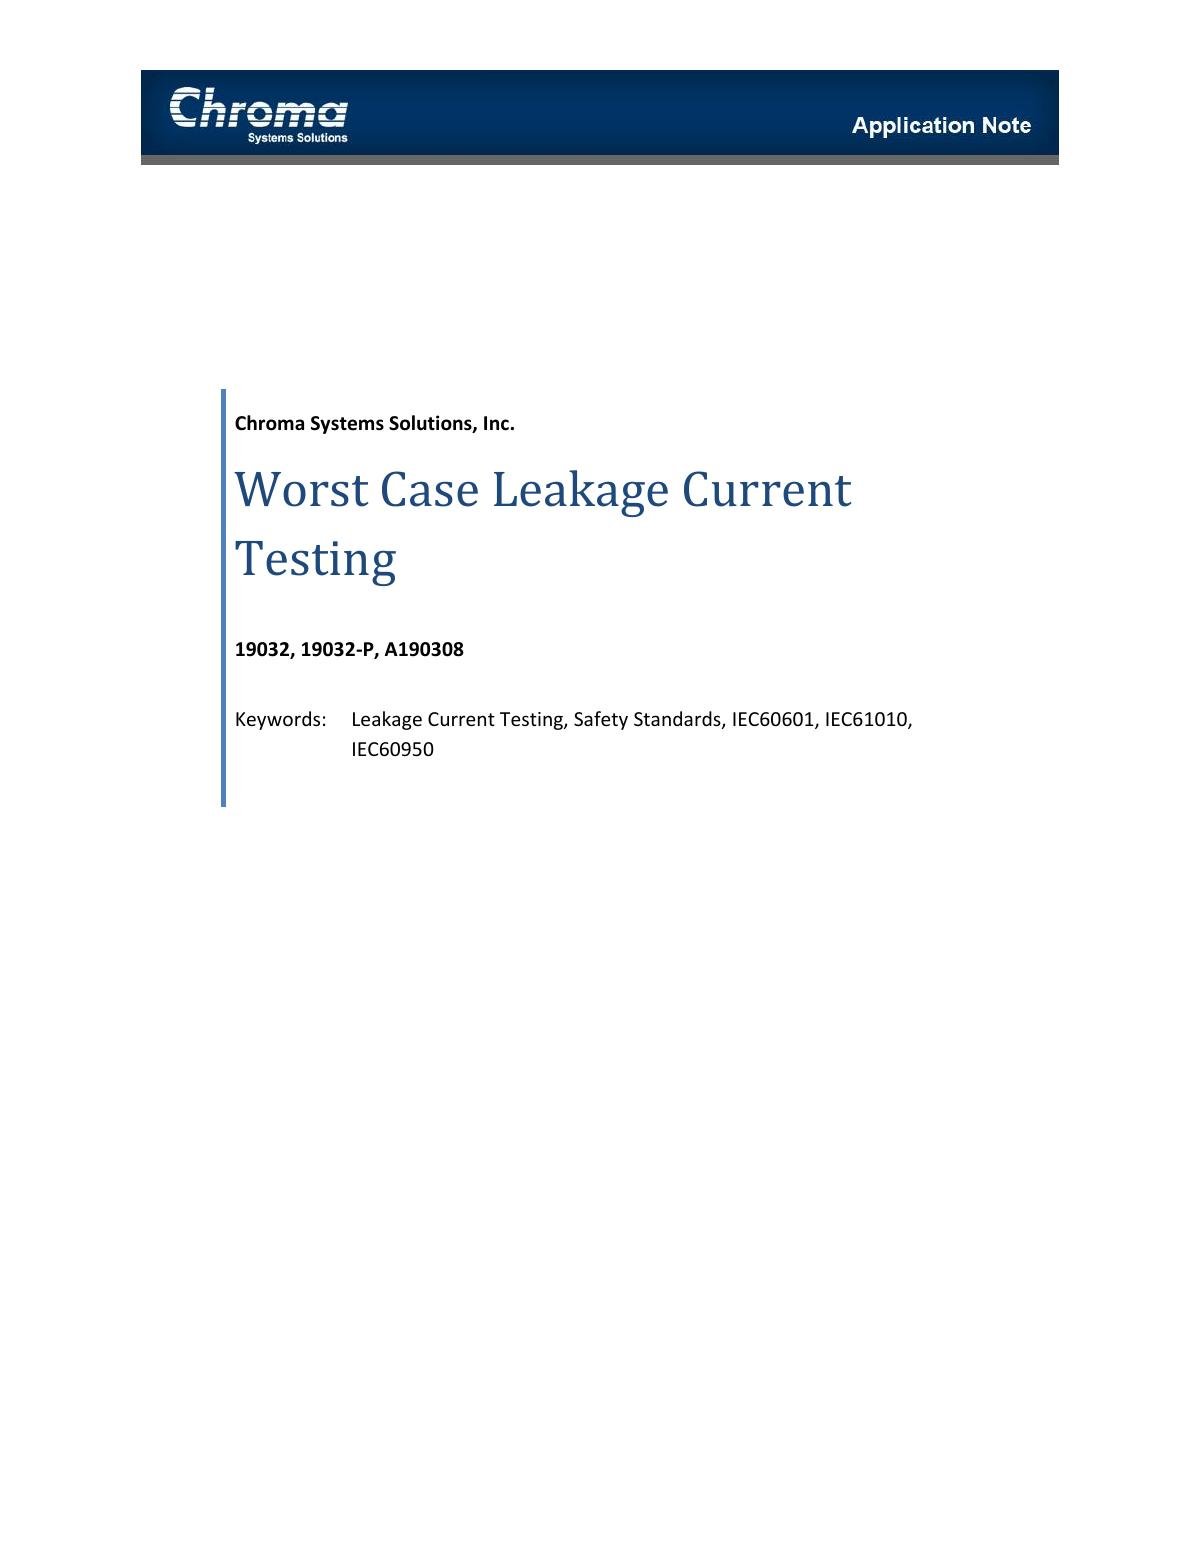 Worst Case Leakage Current Testing